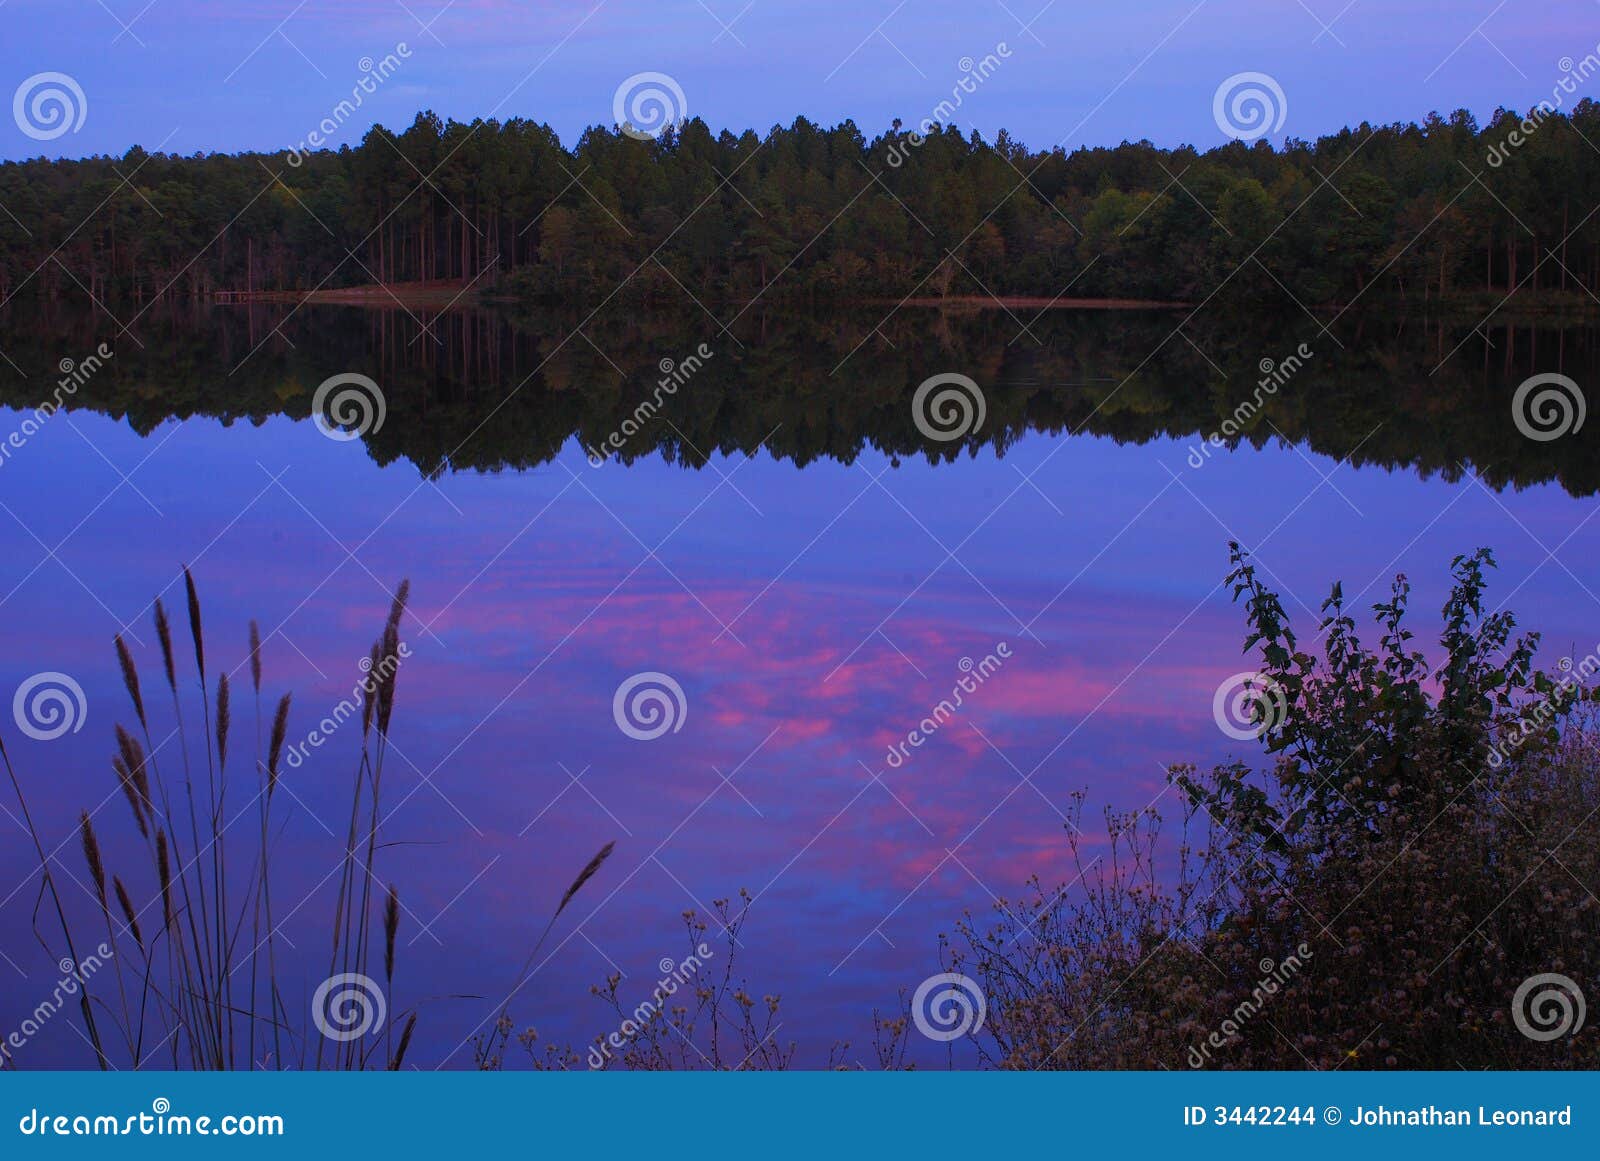 lakeside at dusk